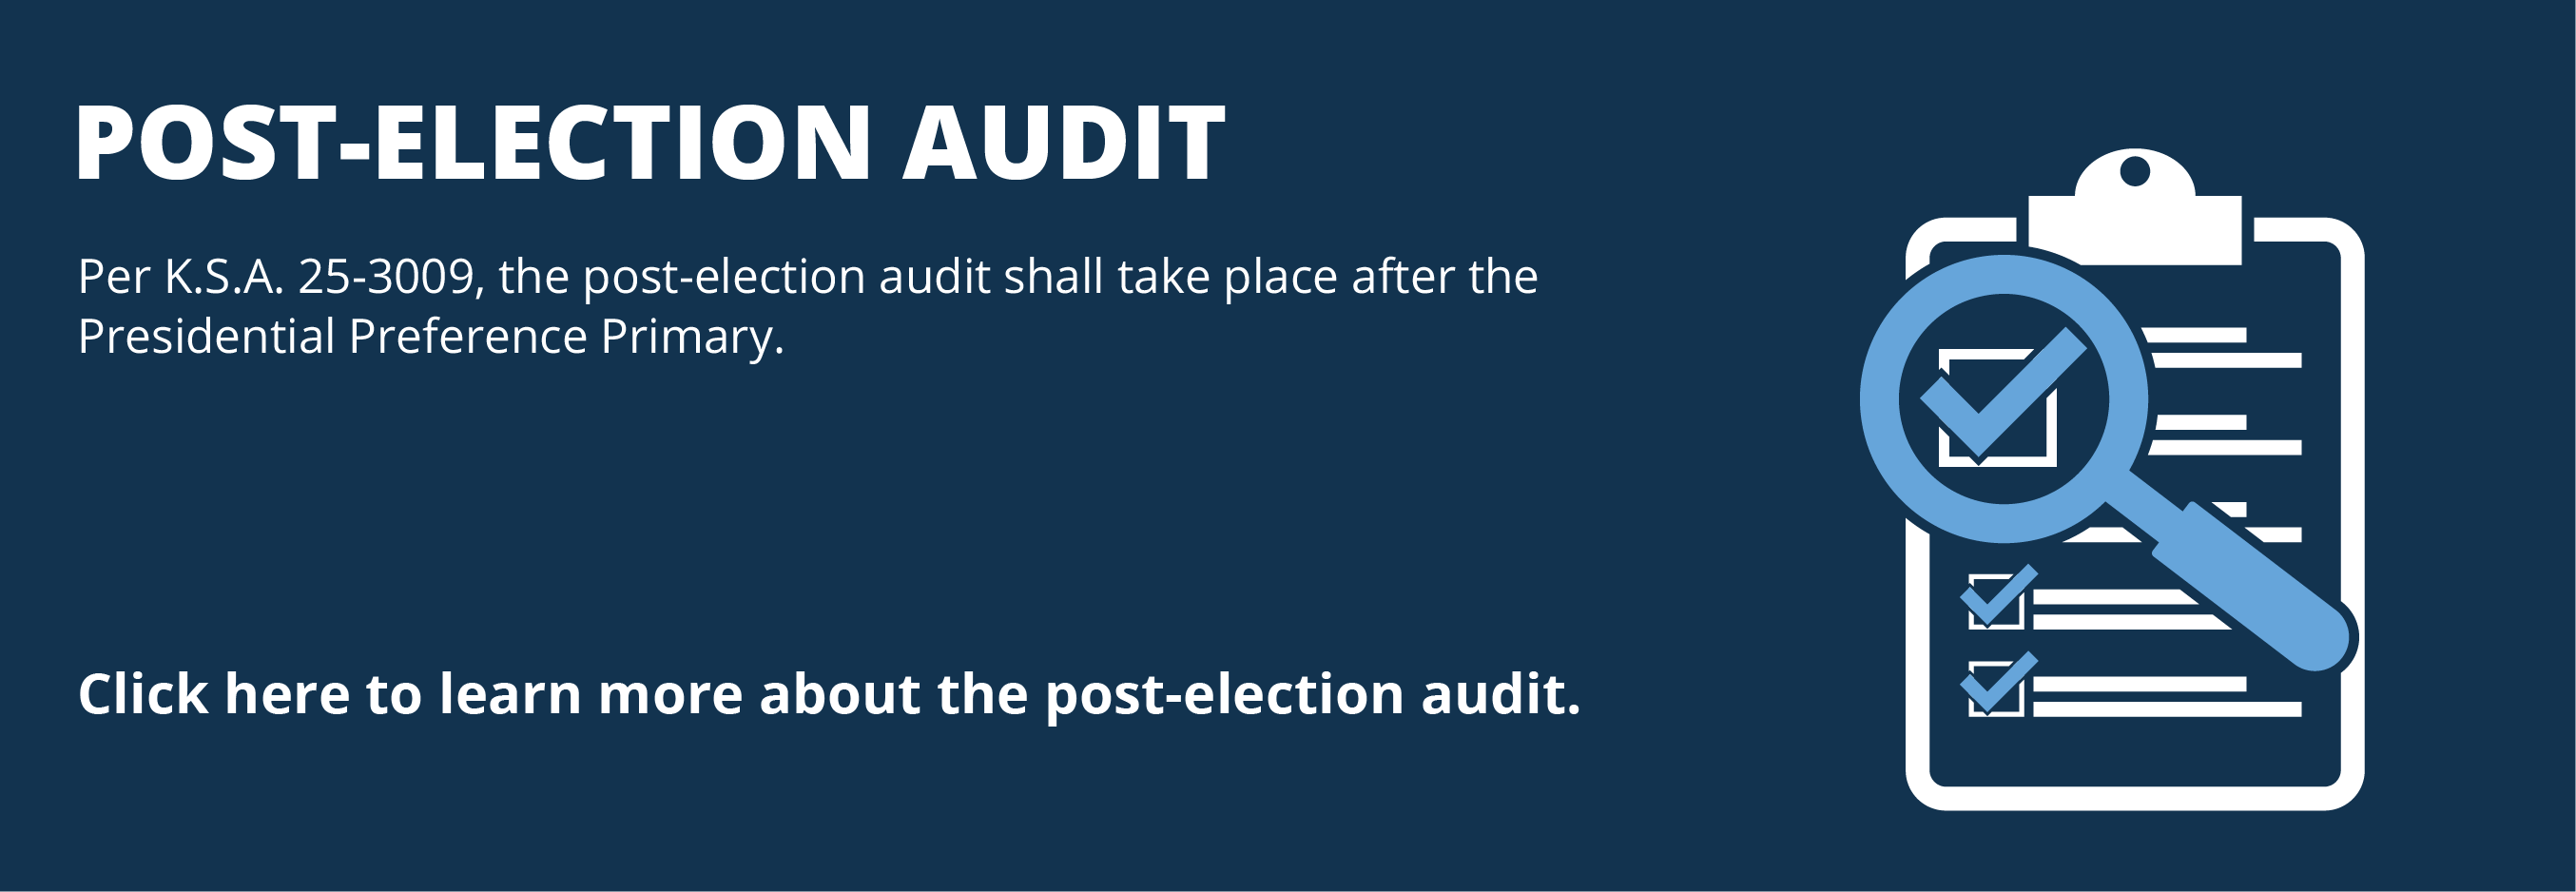 Post-Election Audit image